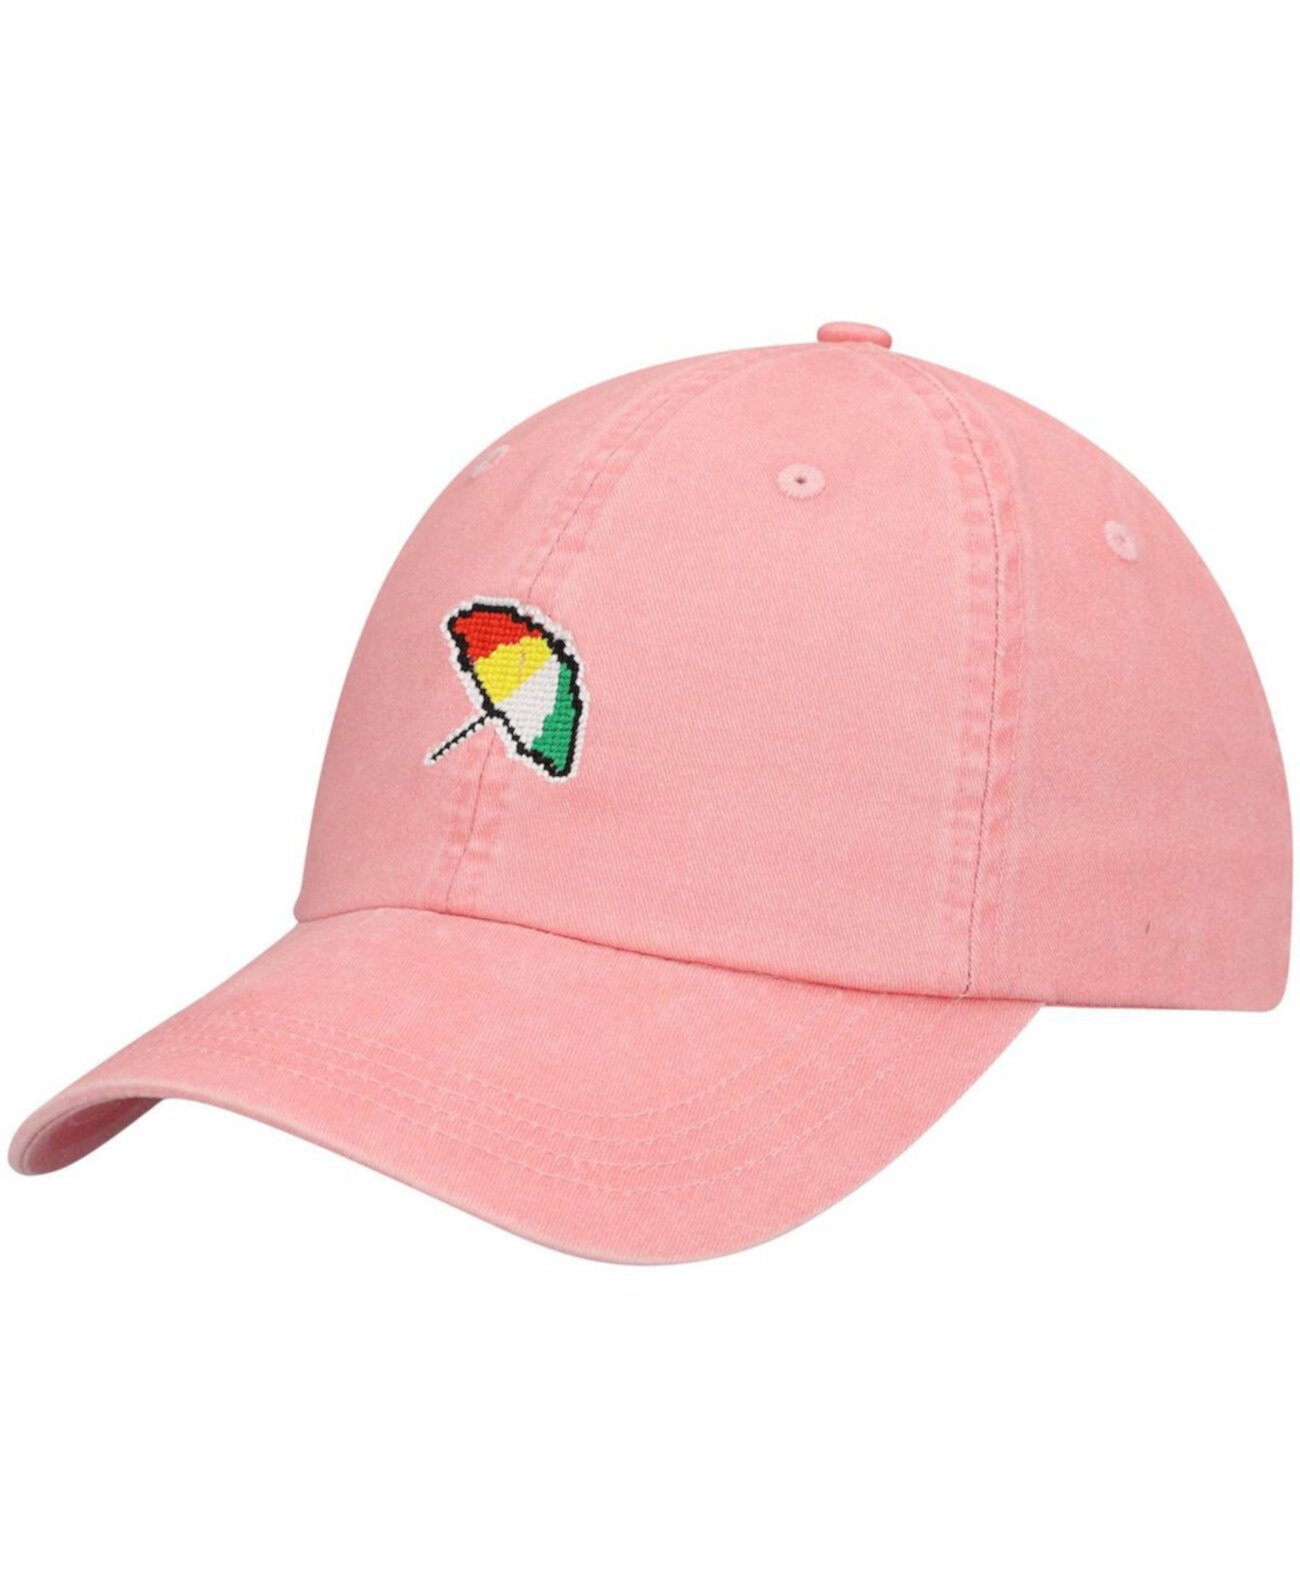 Men's Light Pink Arnold Palmer Pixel Umbrella Adjustable Hat Ahead